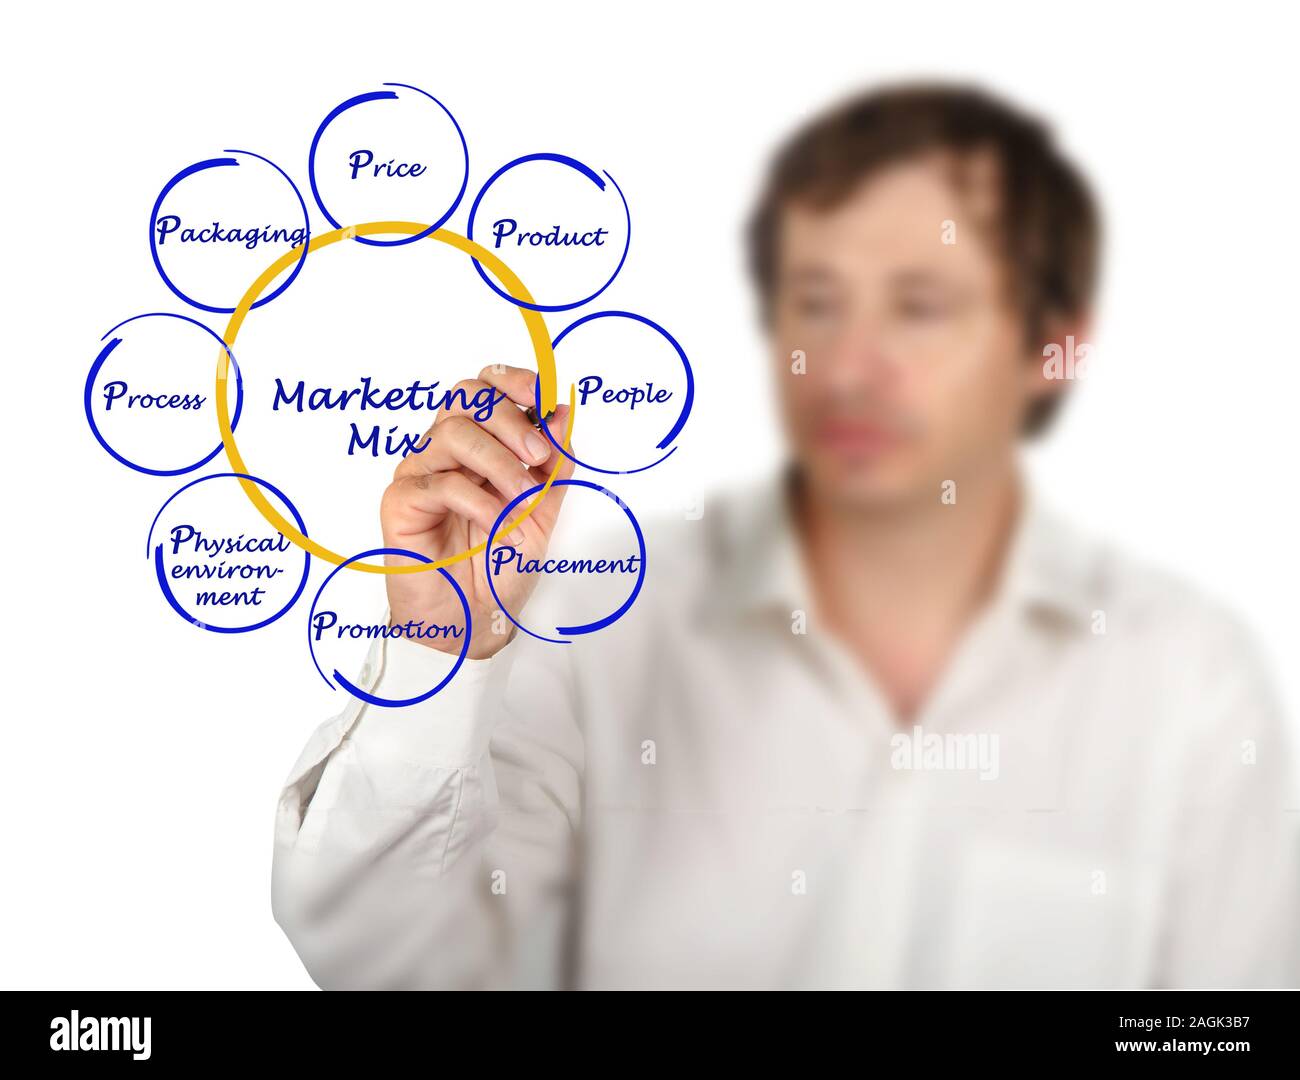 marketing mix Stock Photo - Alamy